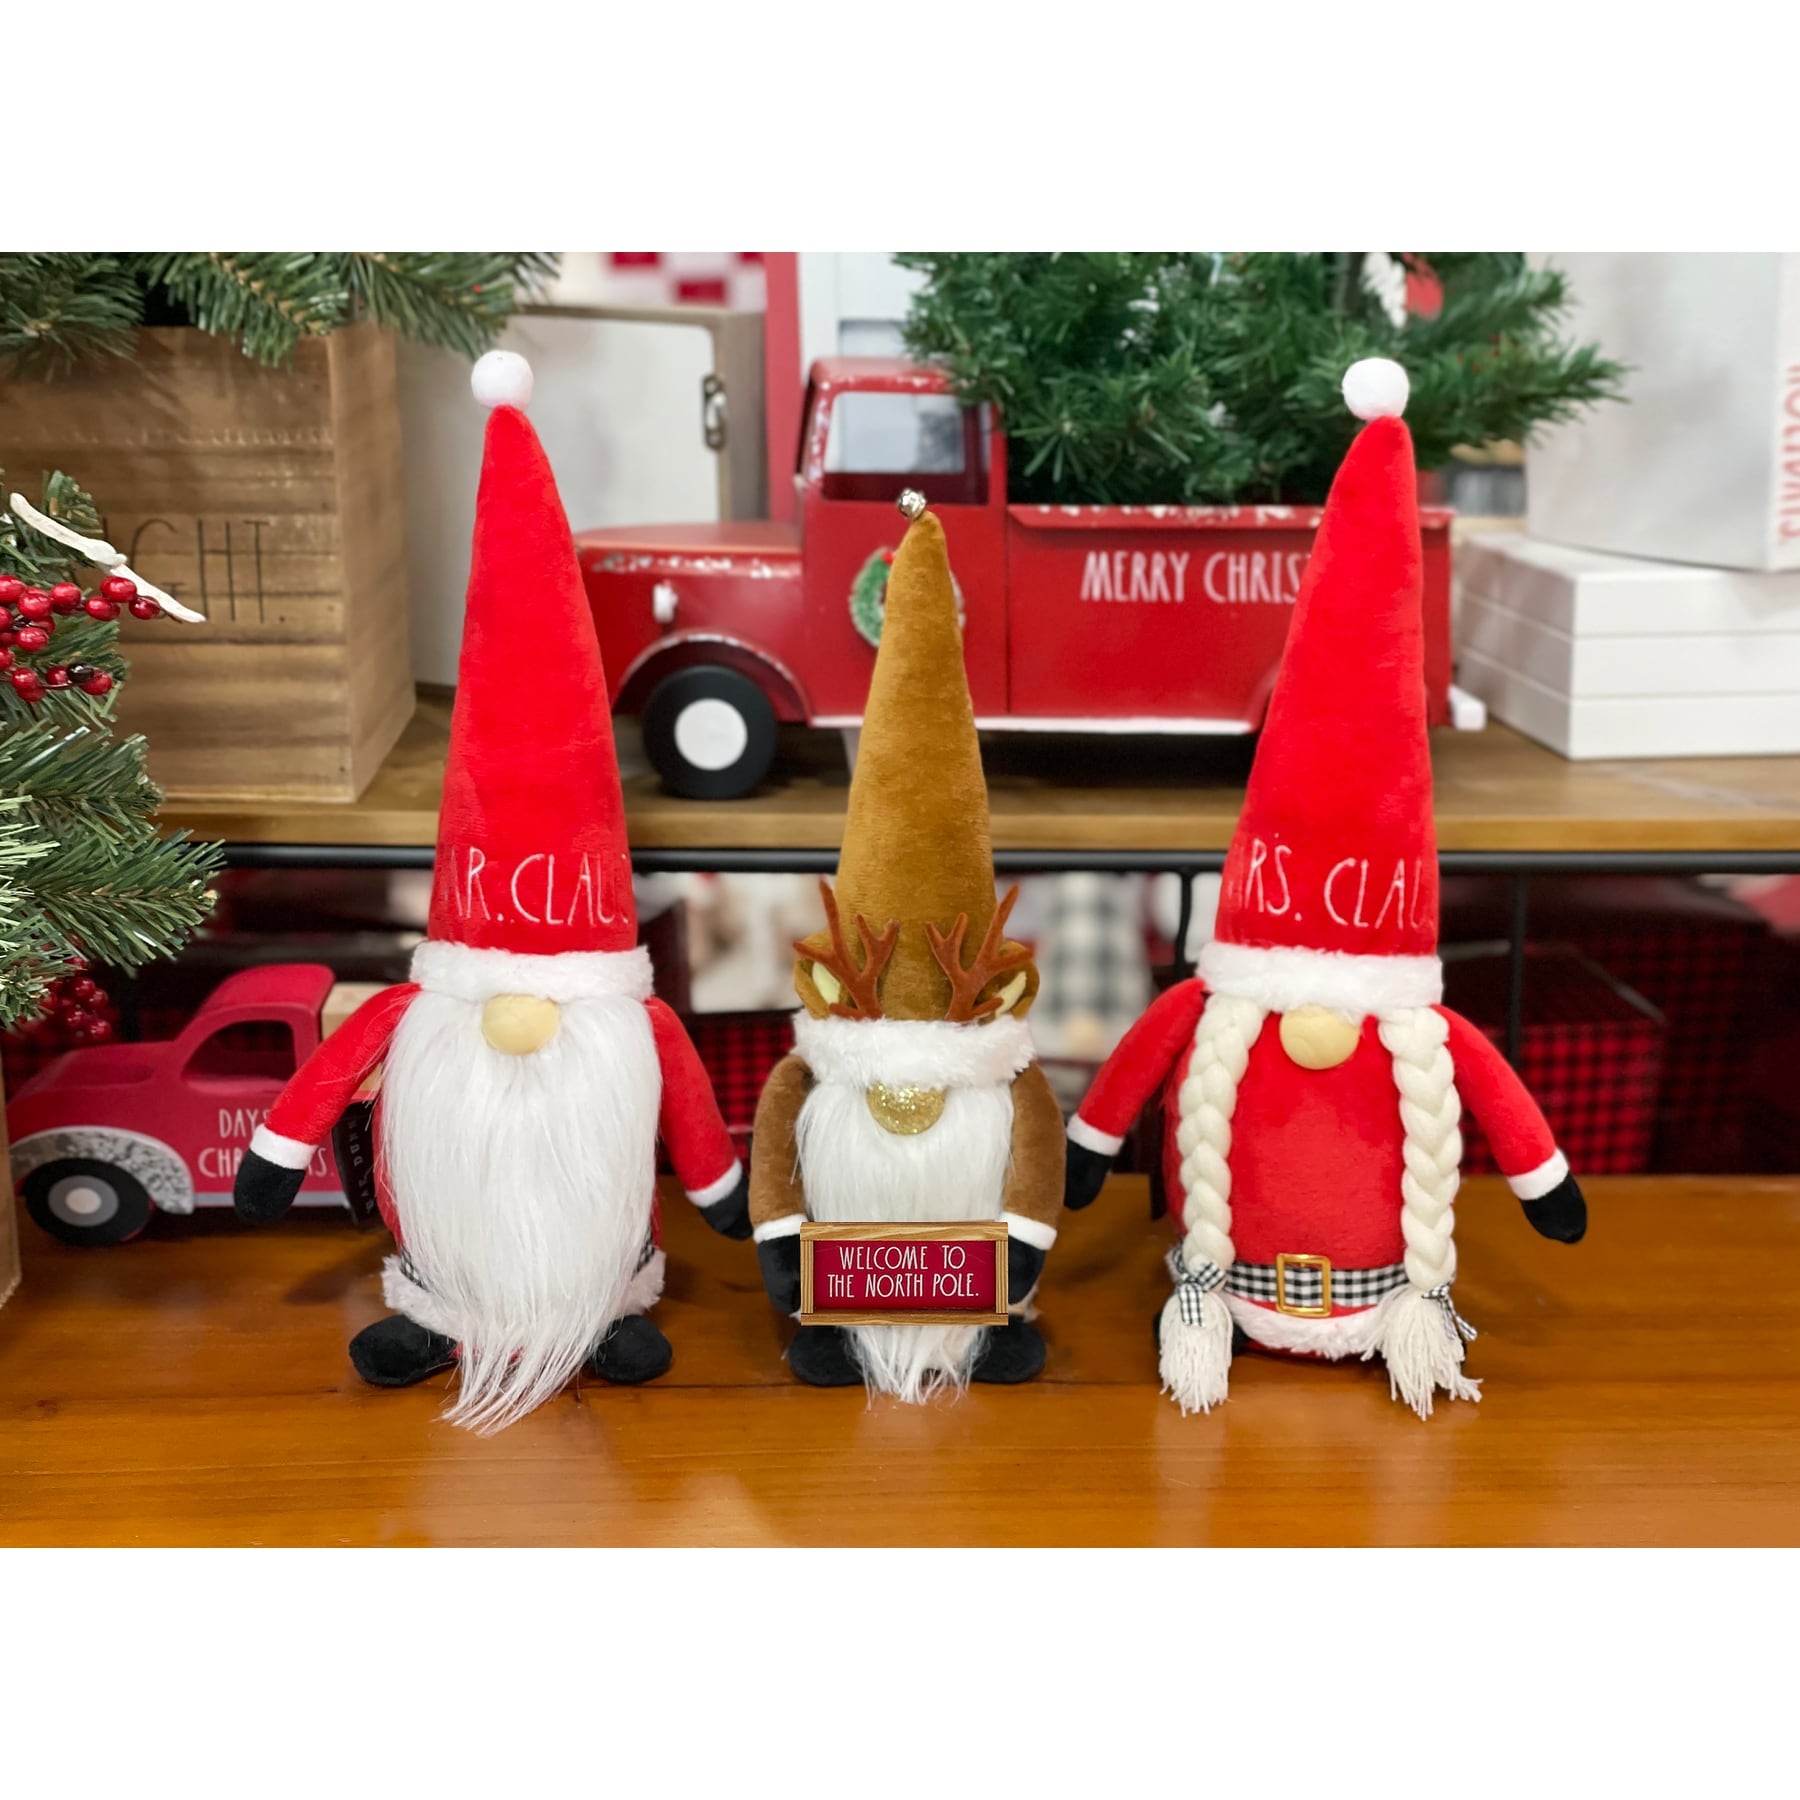 D-GROEE Miniature Christmas Decorations Handmade Santa Gnome Plush